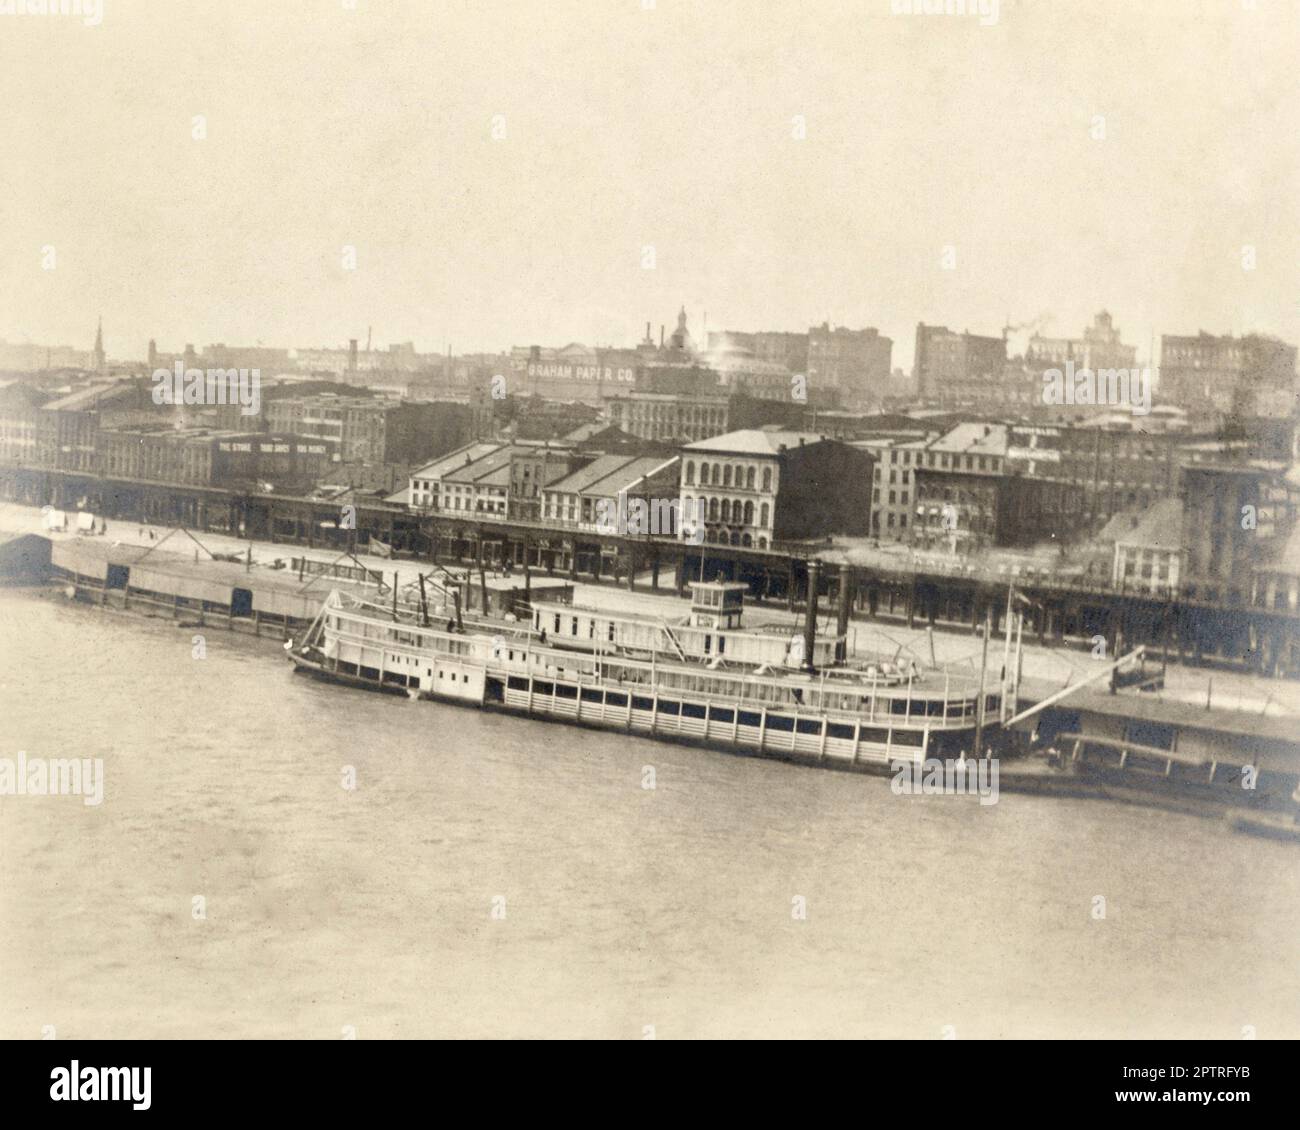 https://c8.alamy.com/comp/2PTRFYB/st-louis-missourri-1900s-st-louis-history-1904-world-fair-riverboat-mississippi-history-paddleboat-2PTRFYB.jpg